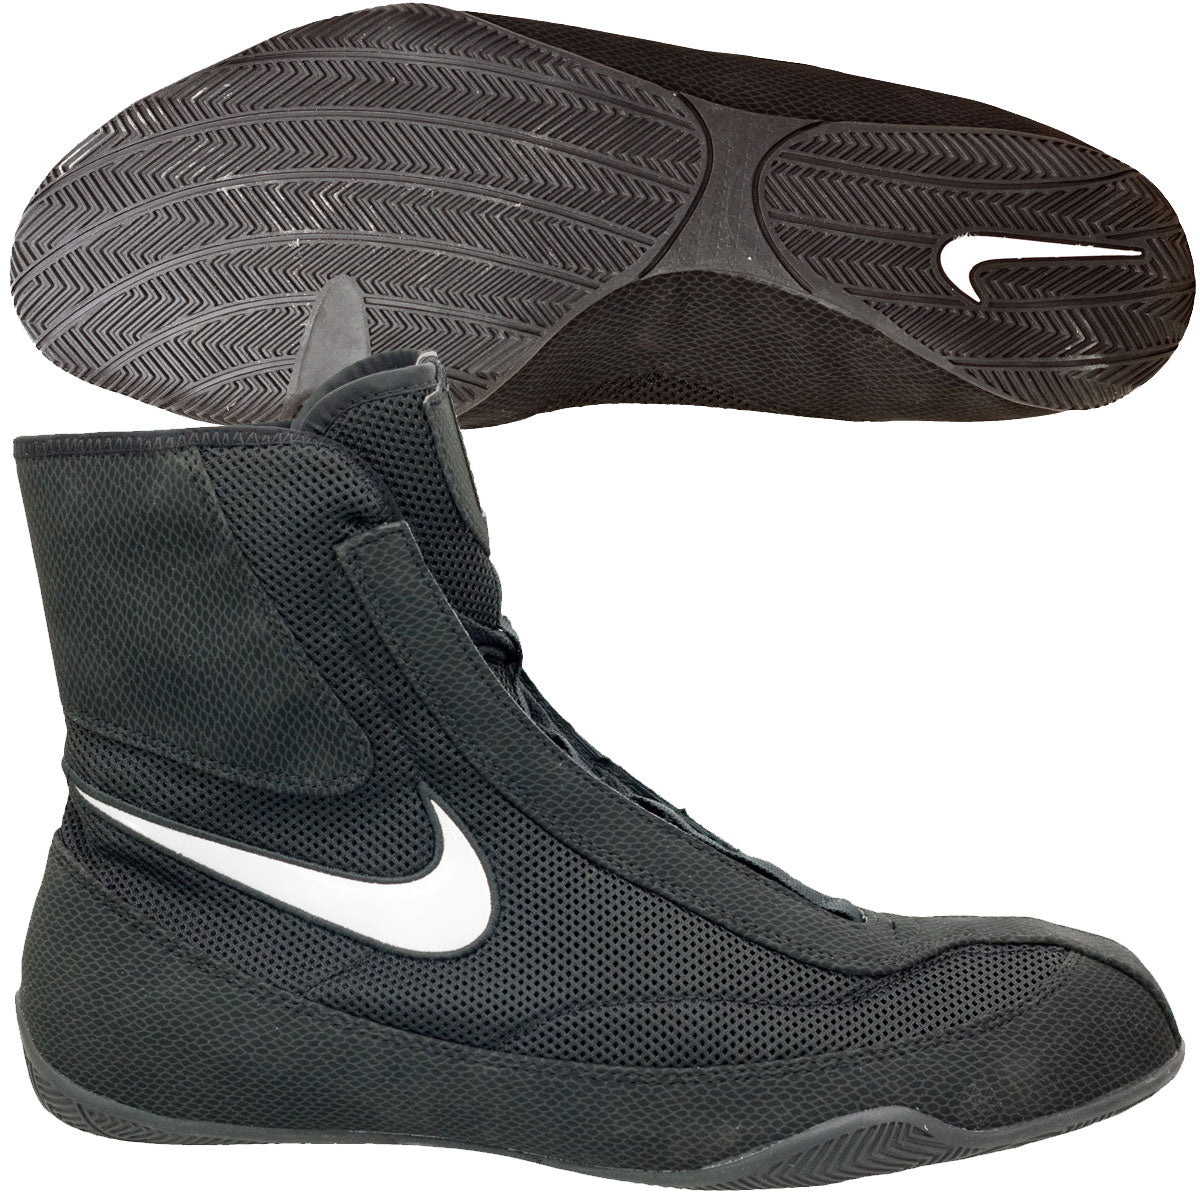 Chaussures de boxe Nike semi-montantes Machomai